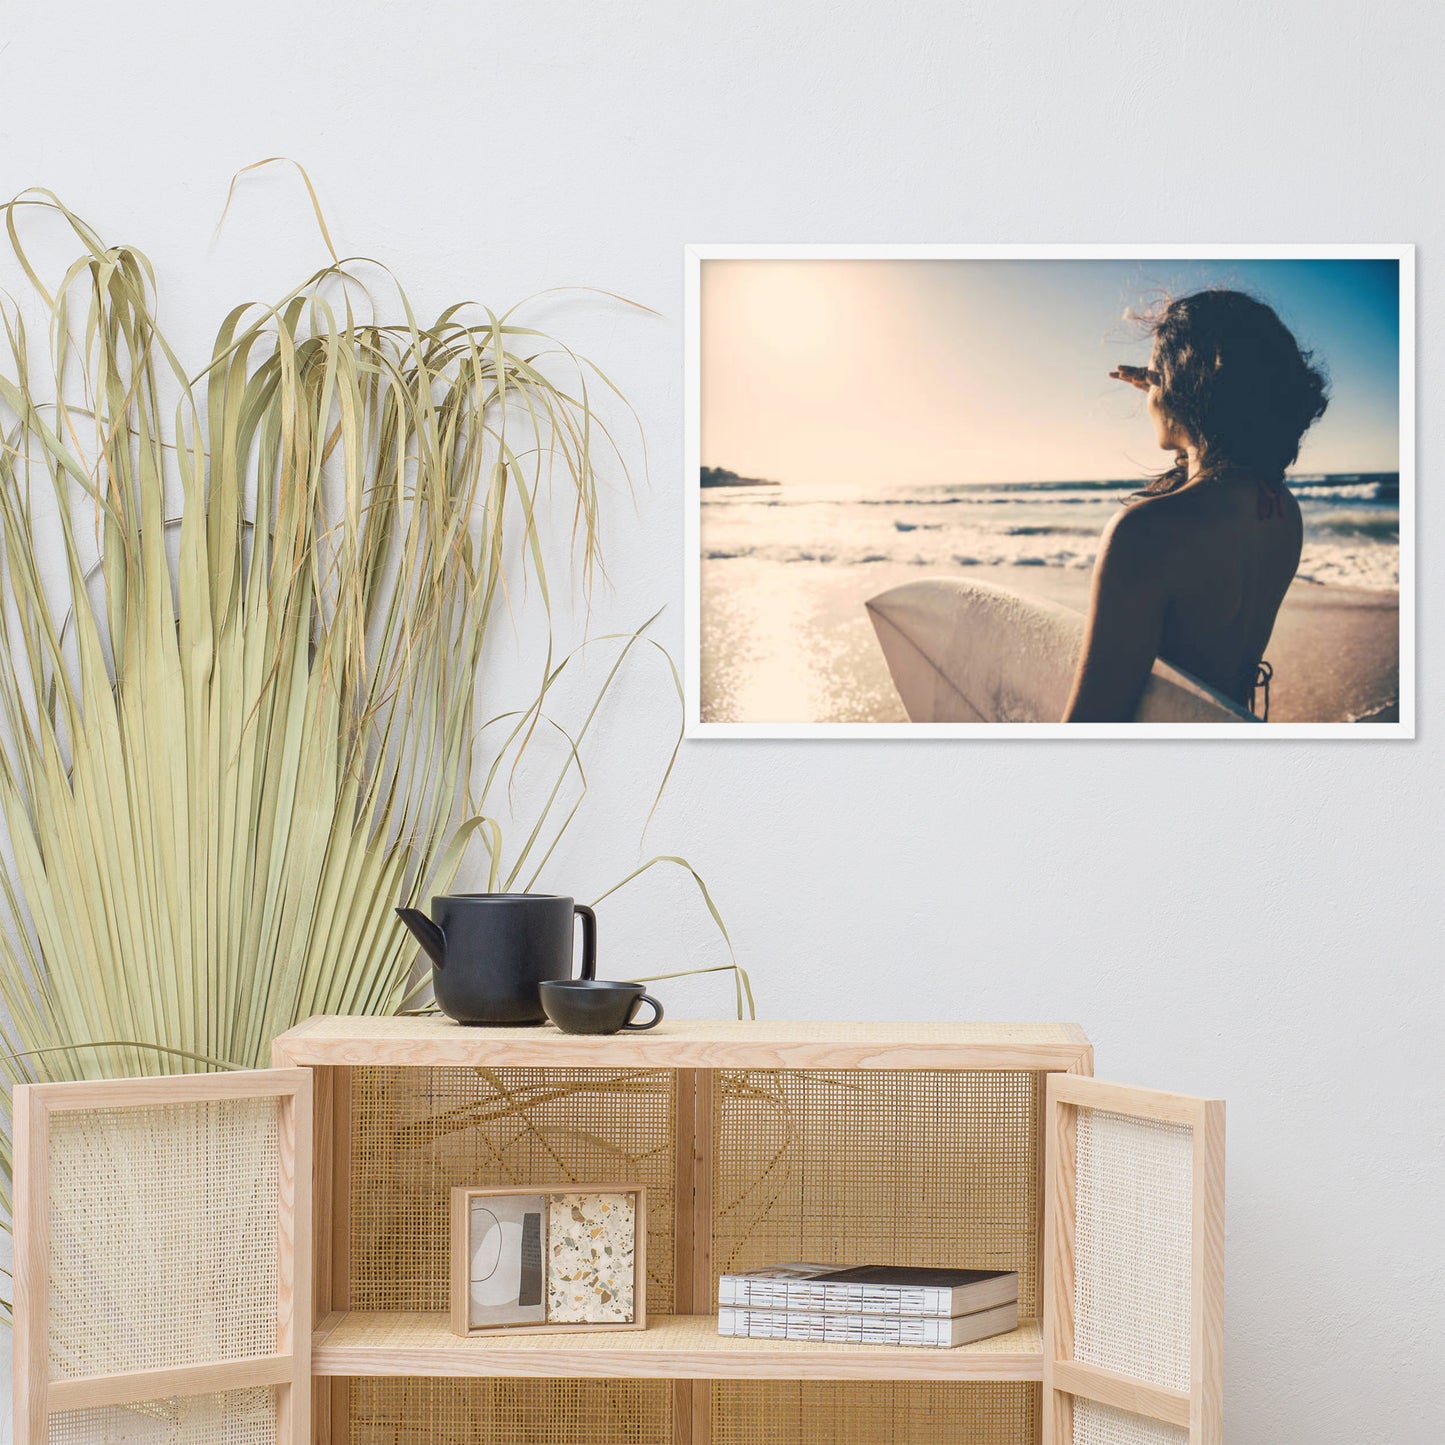 Saltwater Sunrise Coastal Lifestyle Photograph Framed Wall Art Print